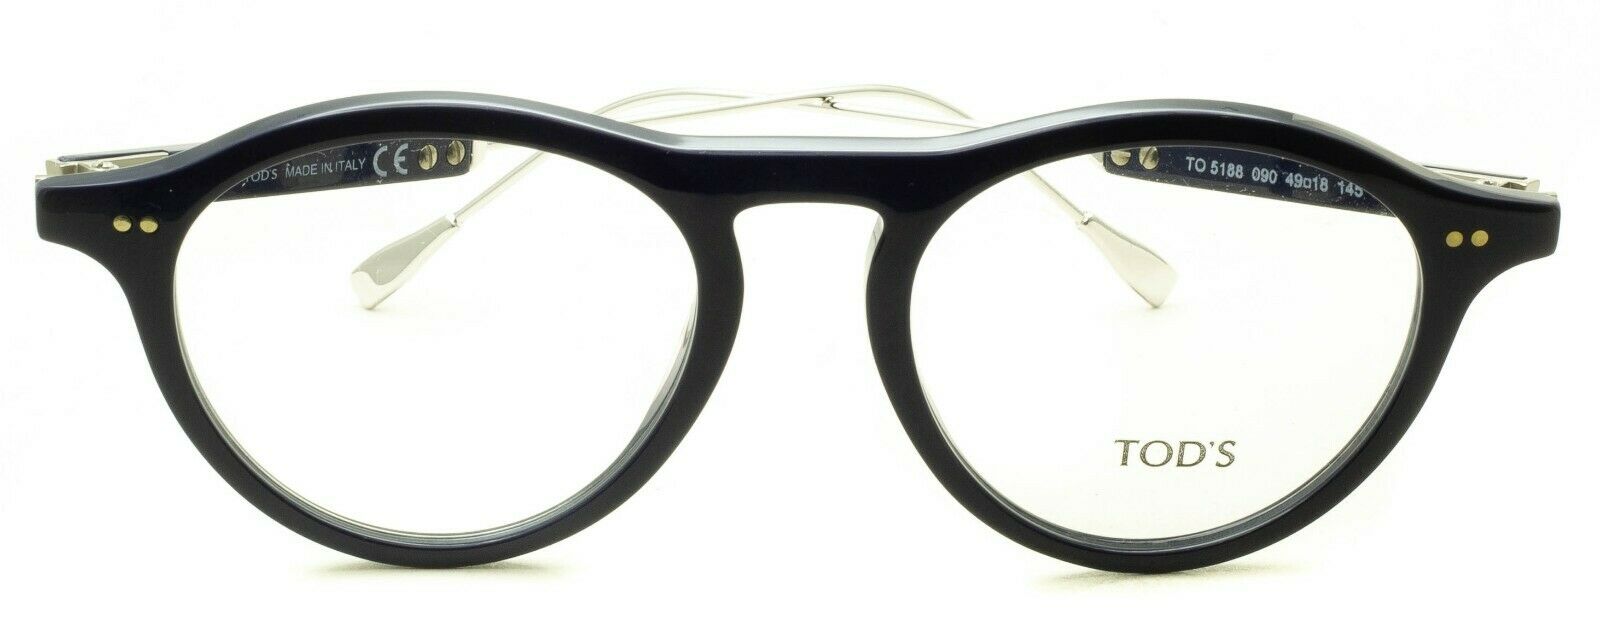 TOD'S TO 5188 090 49mm Eyewear FRAMES Glasses RX Optical Eyeglasses New - Italy